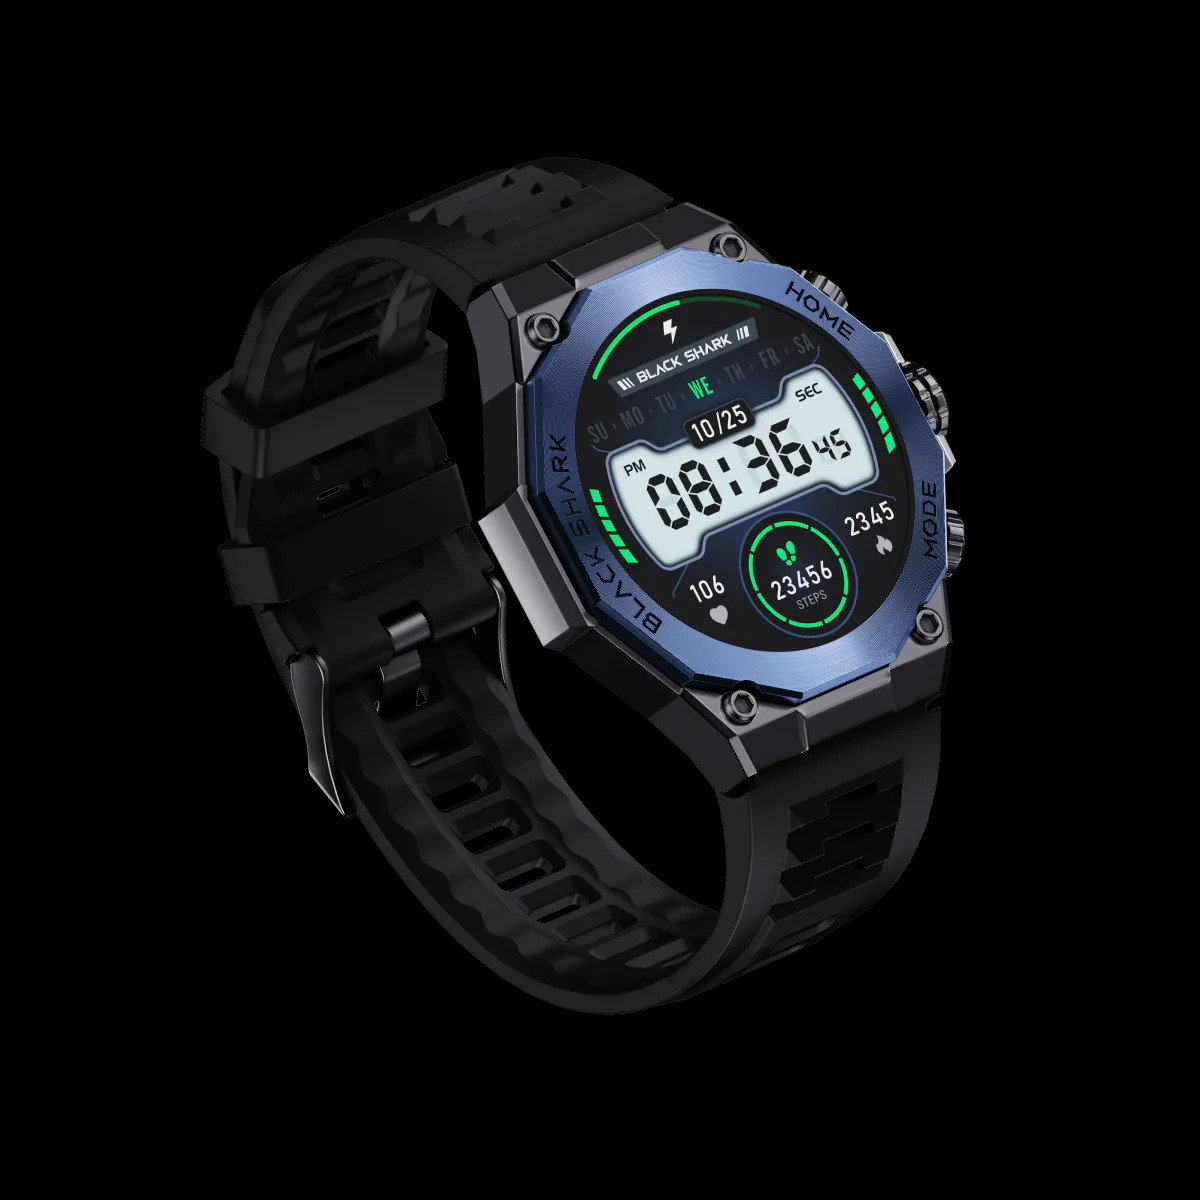 ساعت هوشمند شیائومی مدل BlackShark S1 Pro